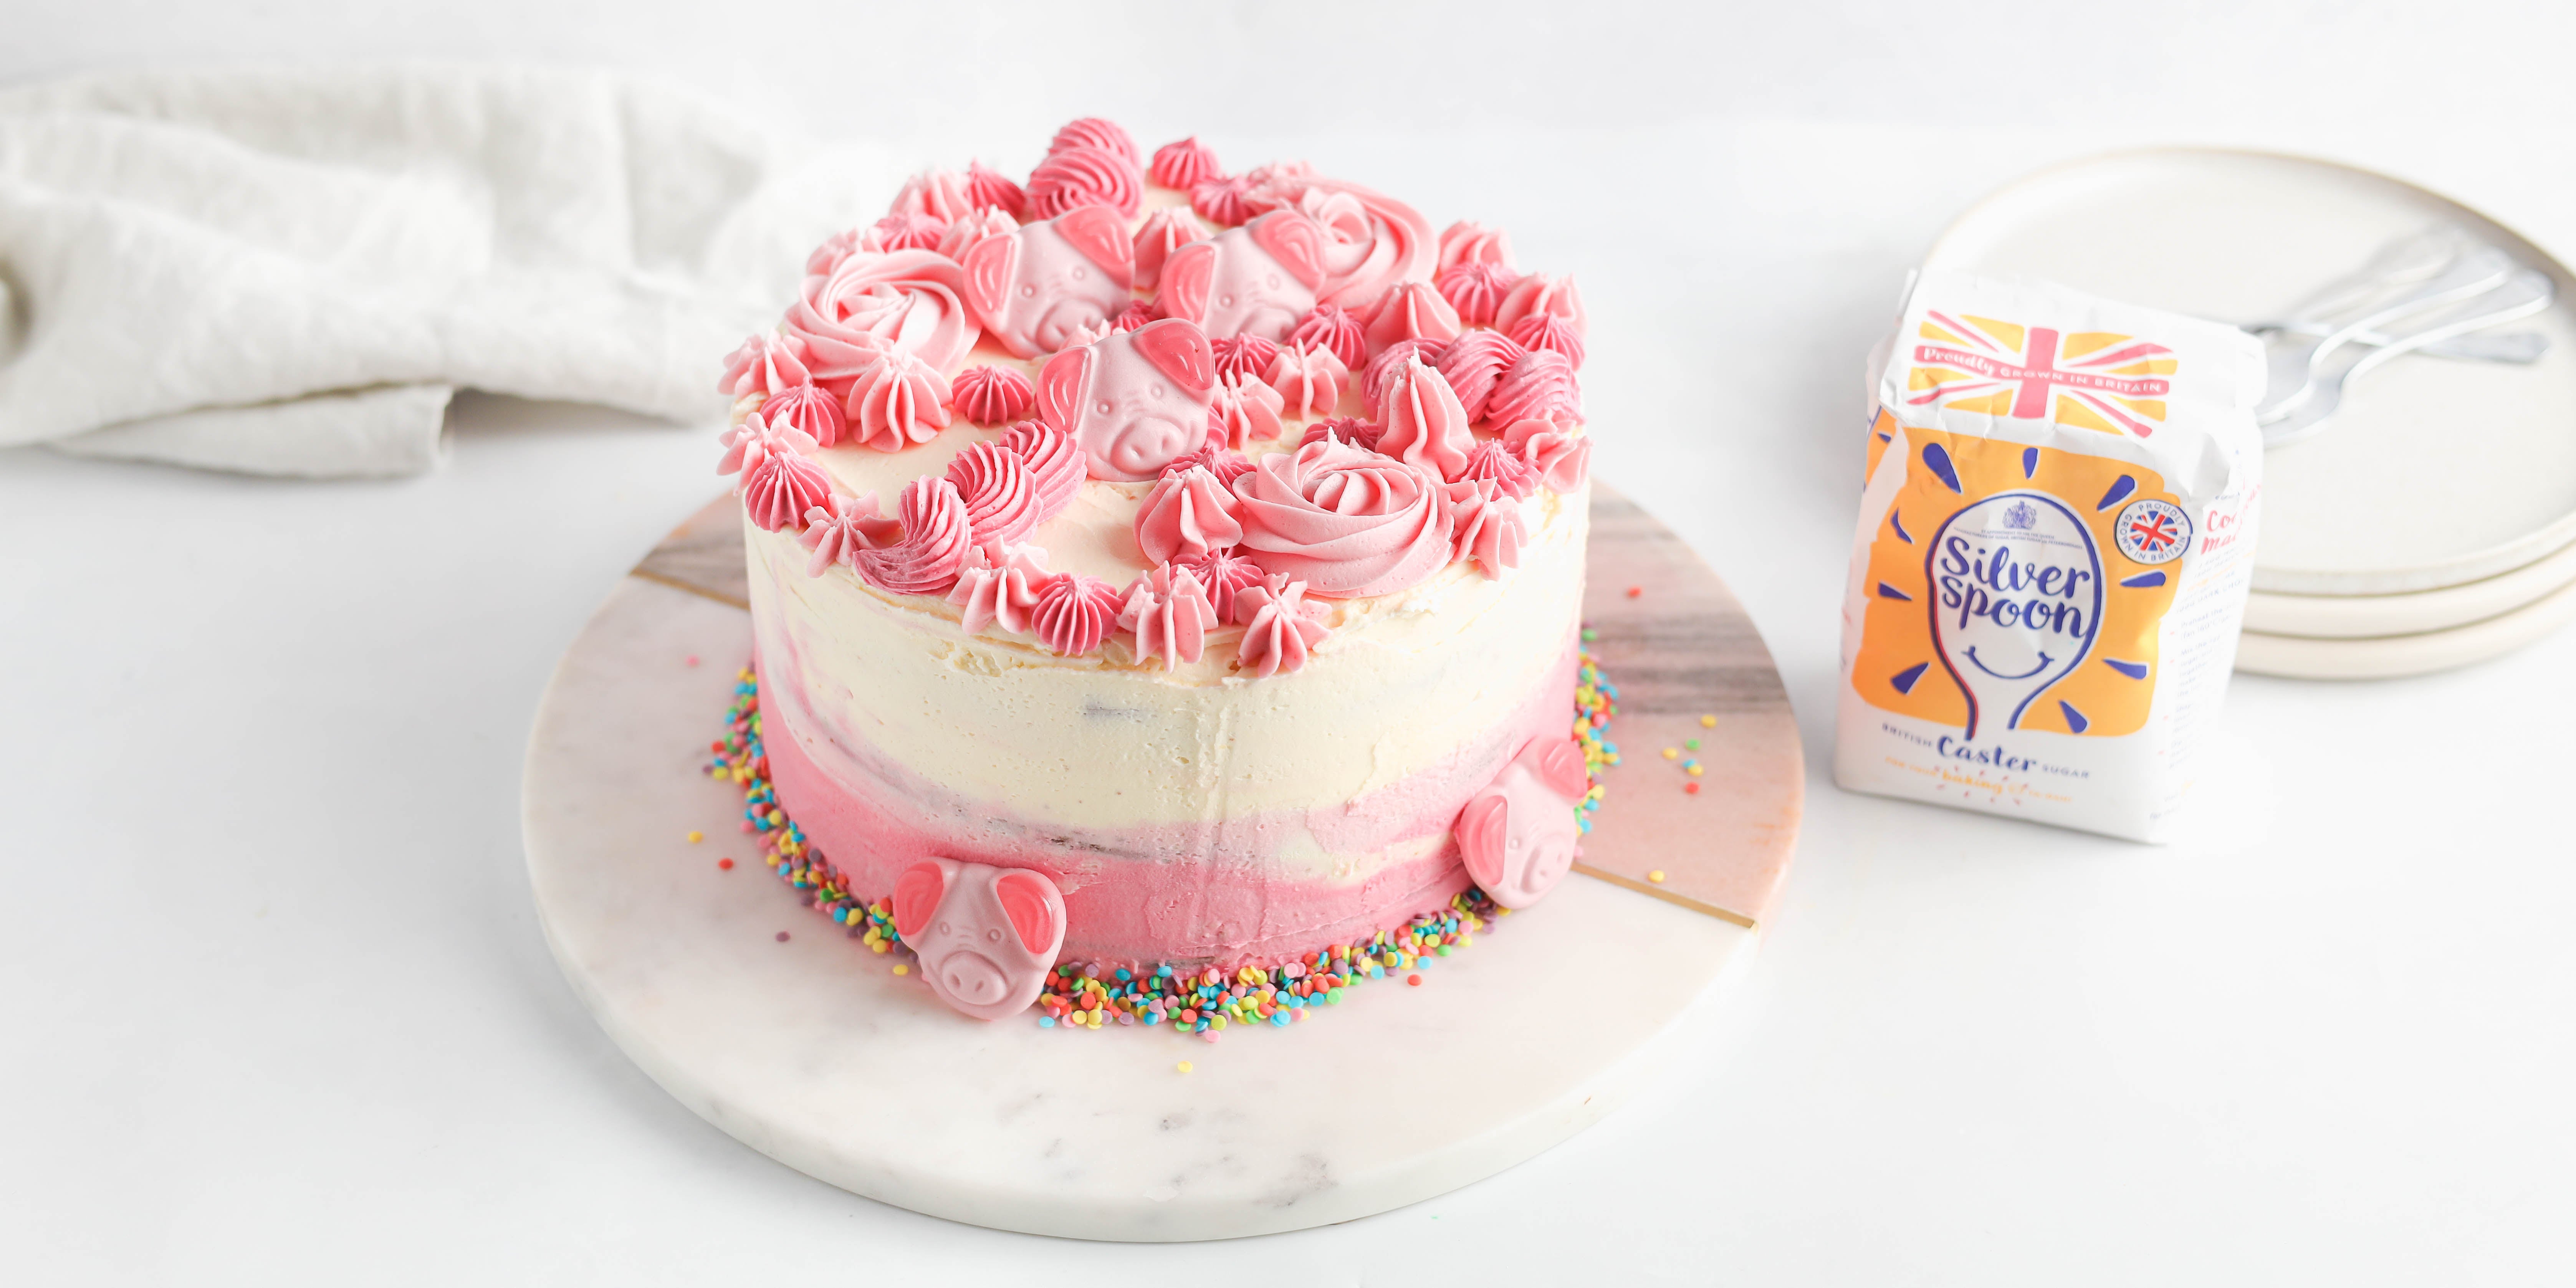 Almond Raspberry Swirl Cake - My Cake School